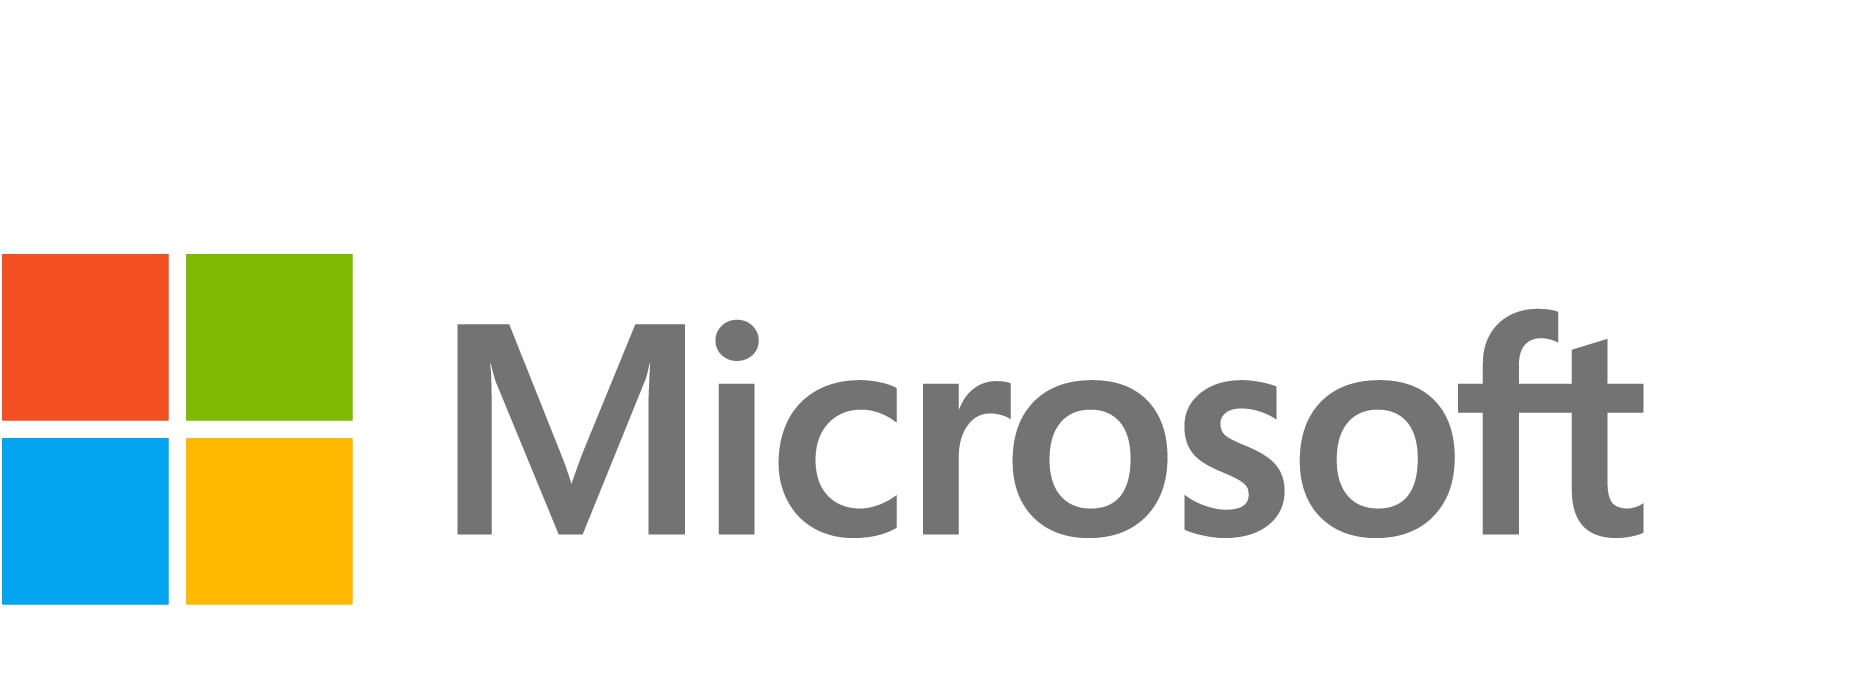 Microsoft Visual Studio Professional Subscription with GitHub Enterprise - license & software assurance - 1 license